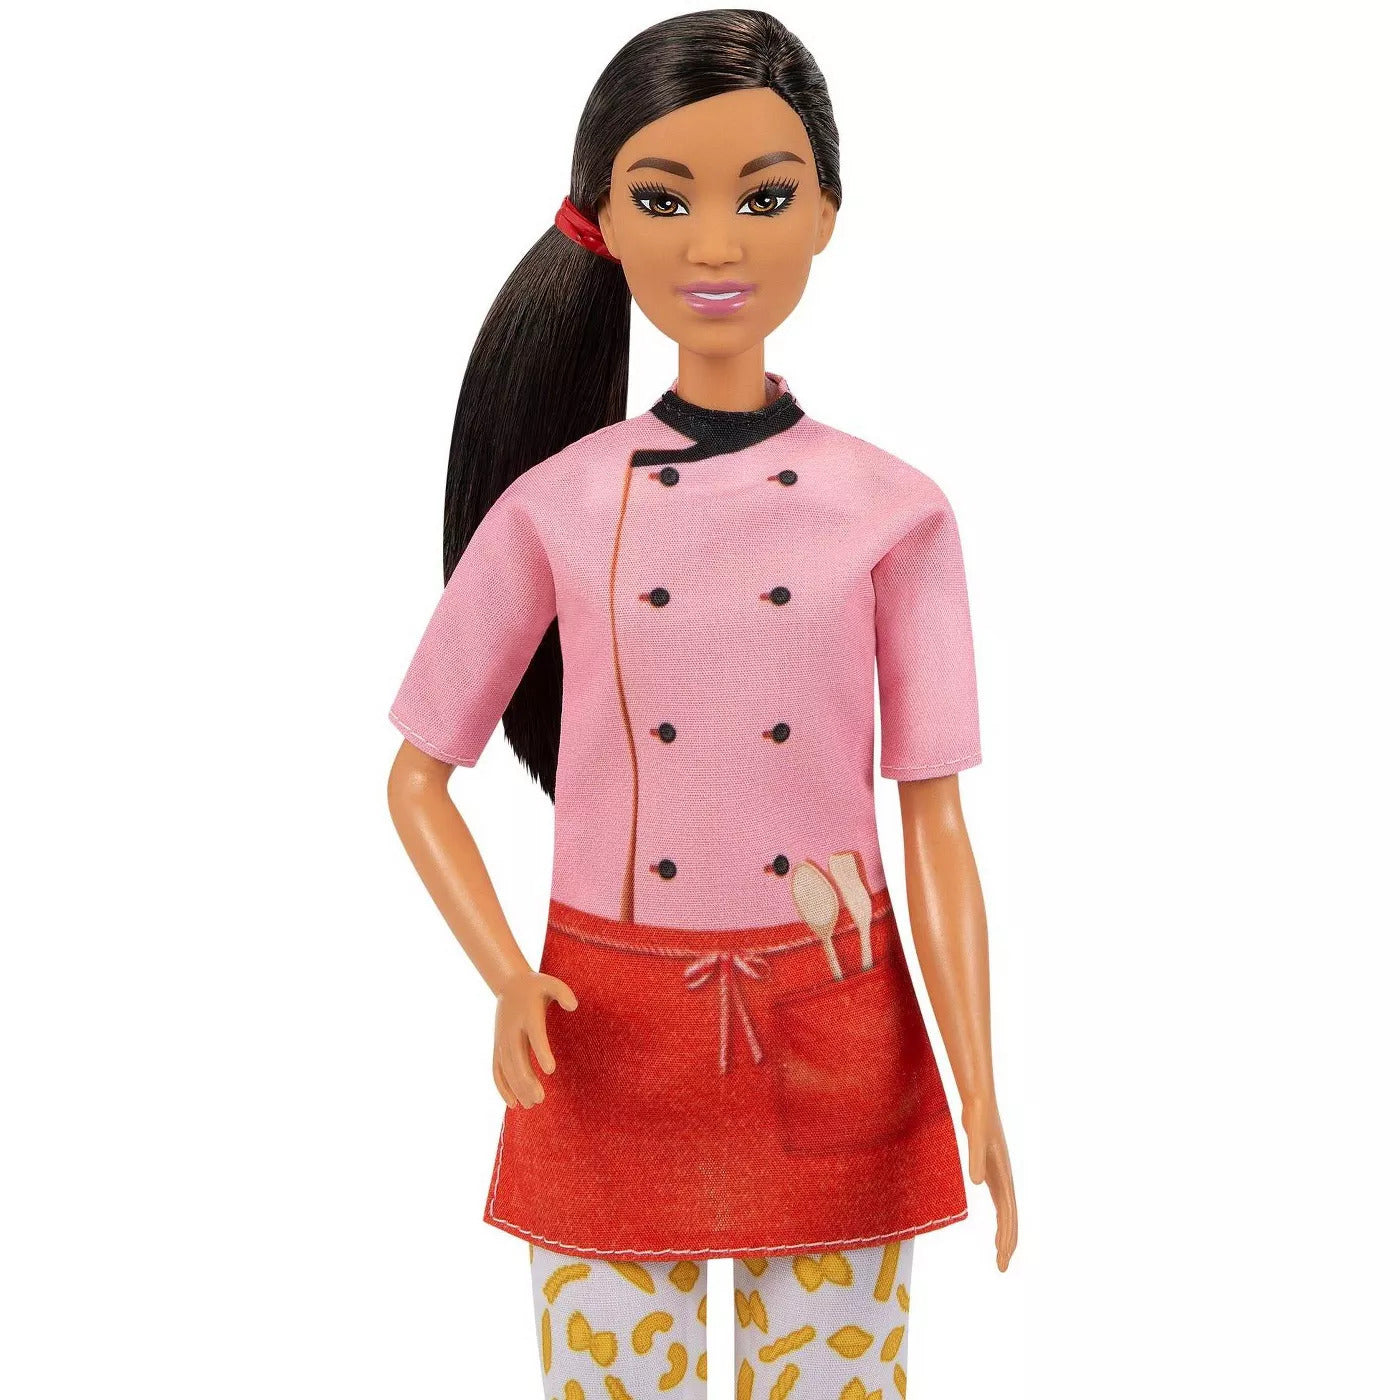 Barbie Careers Doll - Pasta Chef